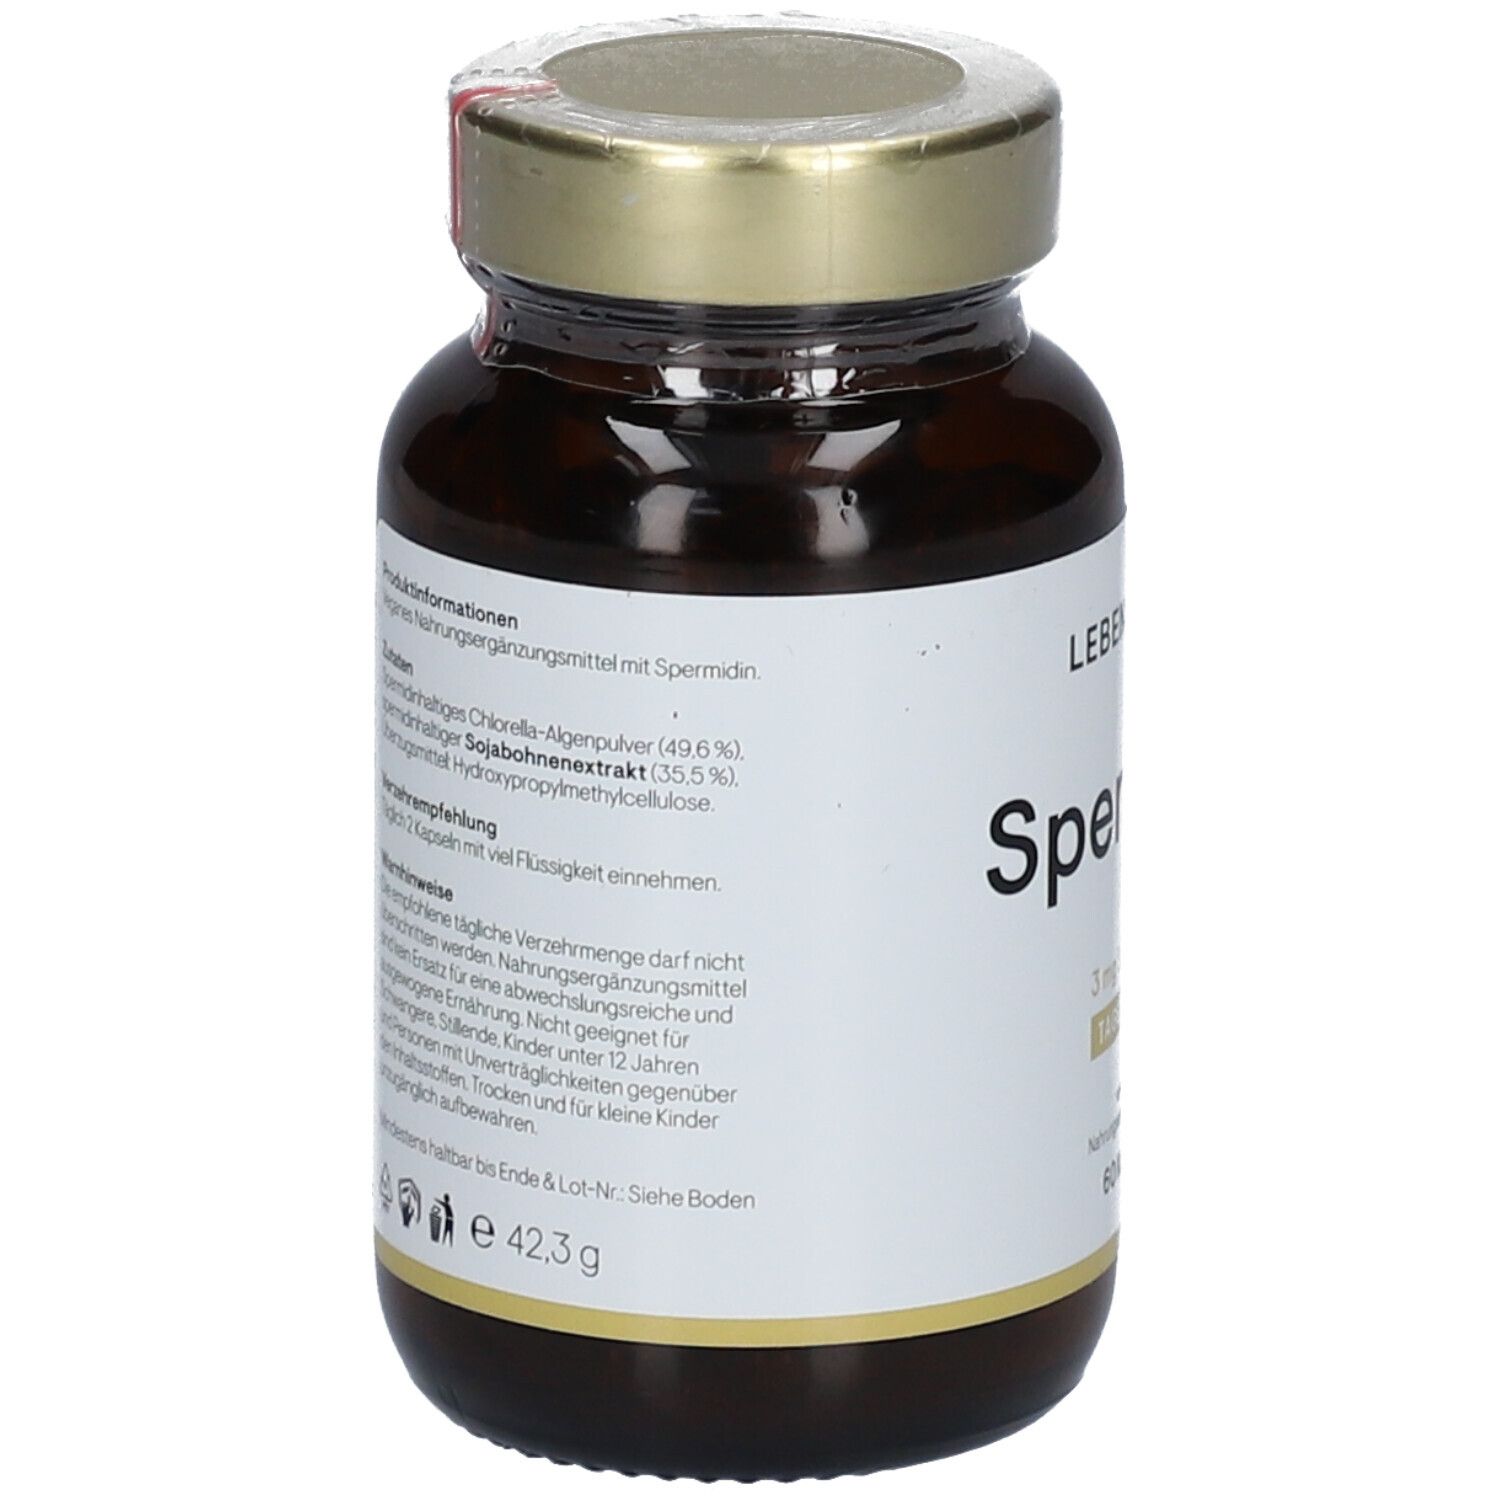 LEBENSWERT+ PLUS Spermidin 3 mg